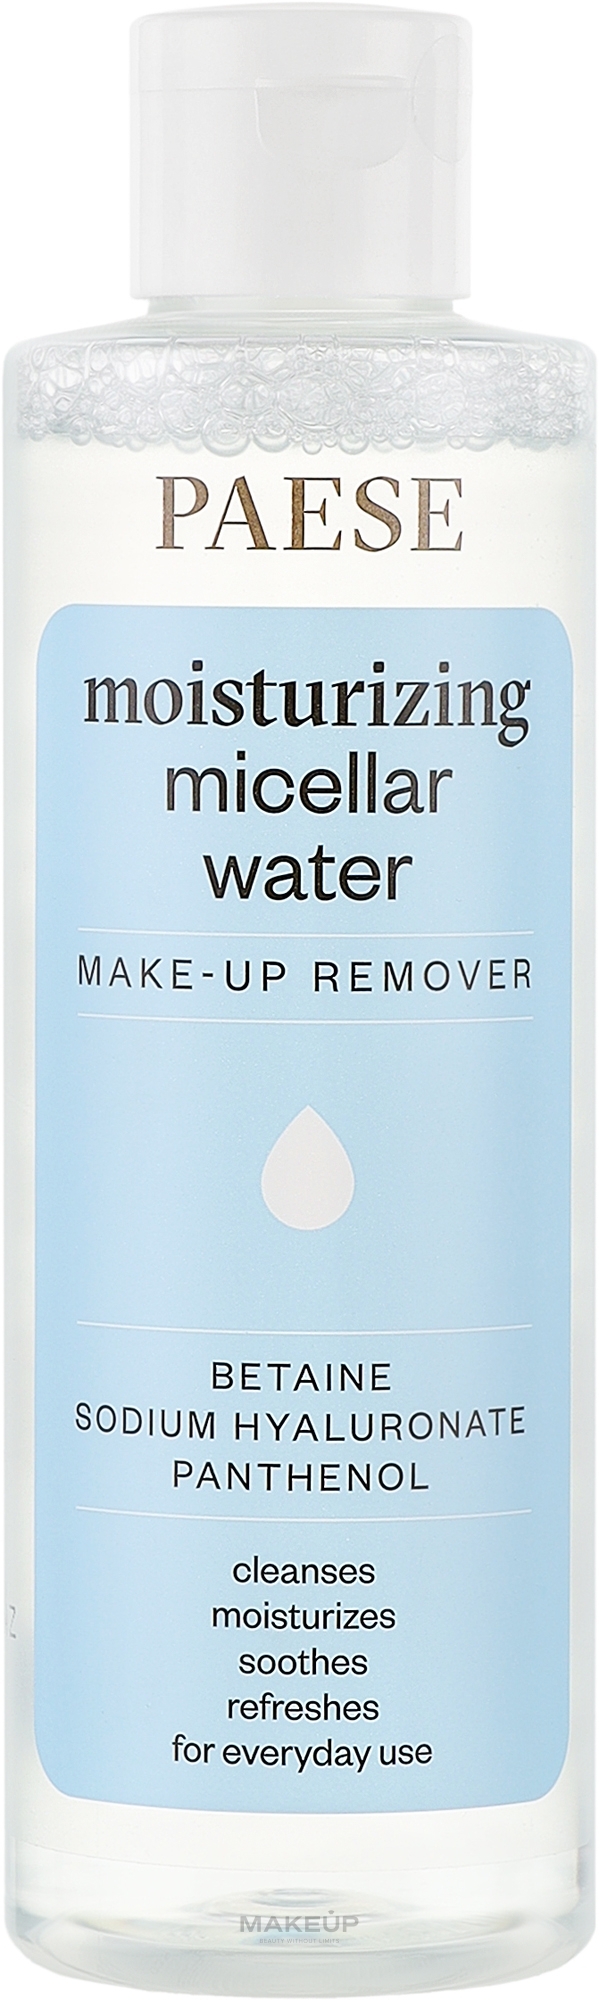 Увлажняющая мицеллярная вода для очищения лица и снятия макияжа - Paese Moisturizing Micellar Water — фото 200ml